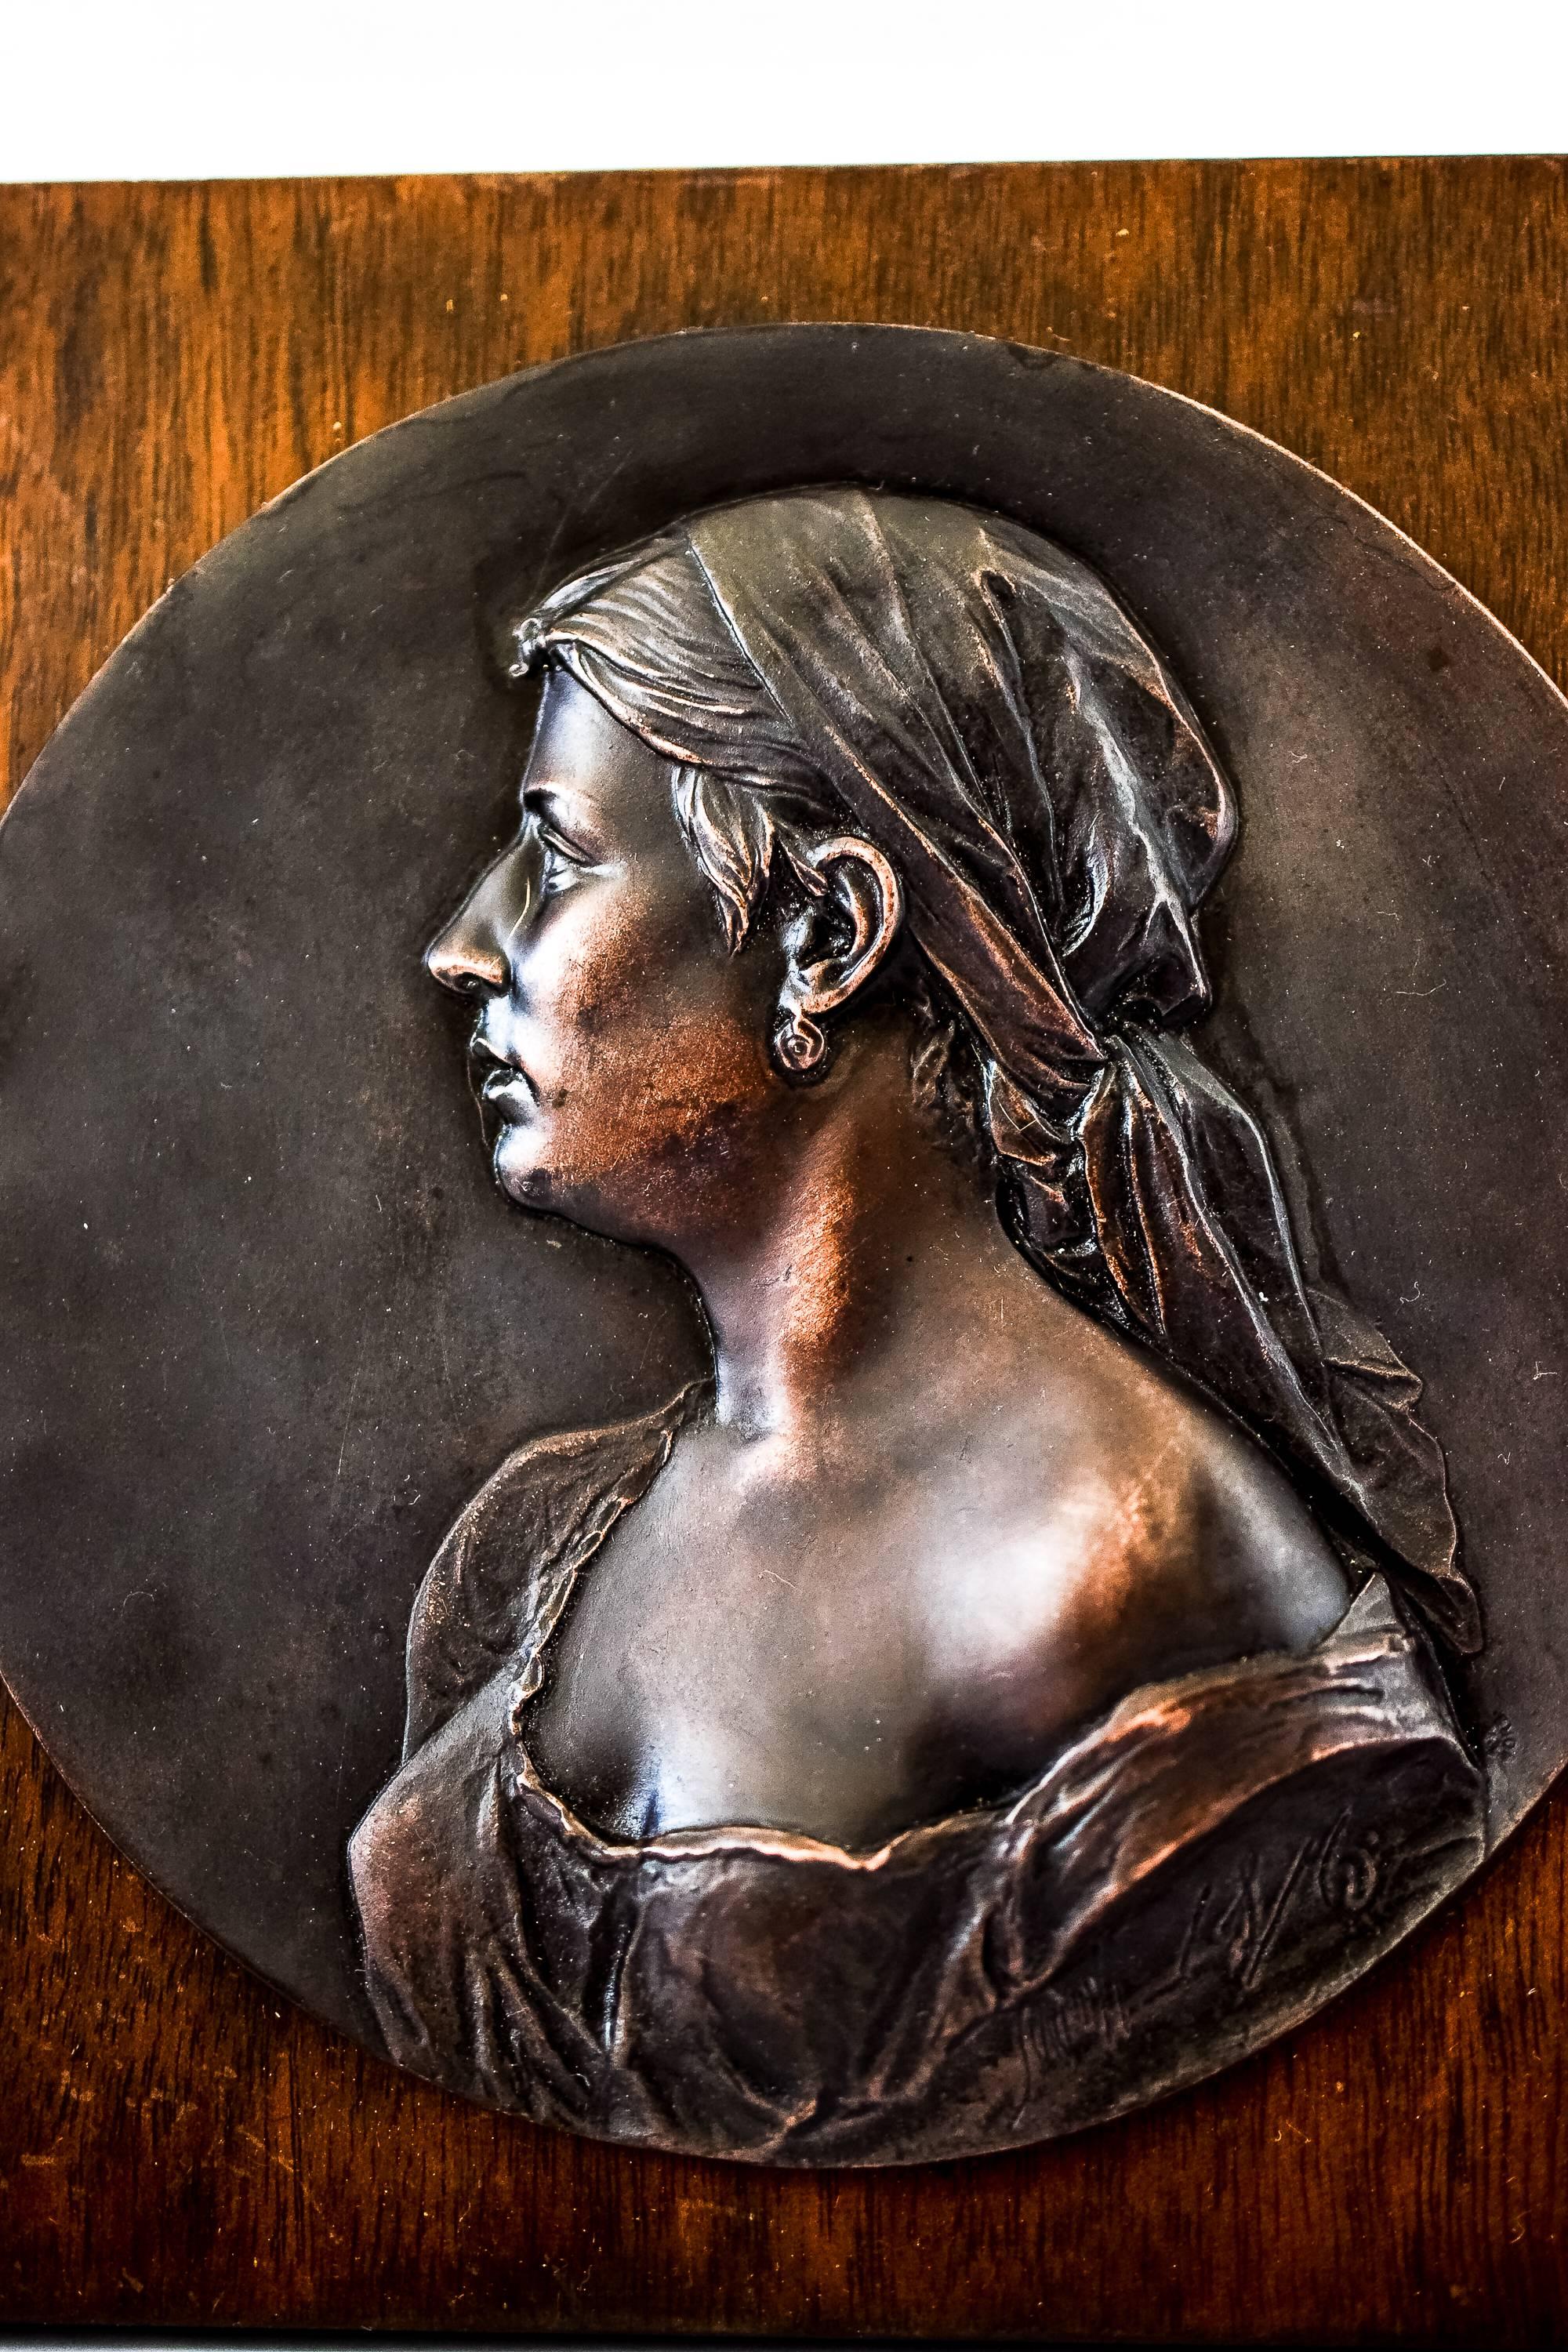 Bronze relief on wood
Original condition.